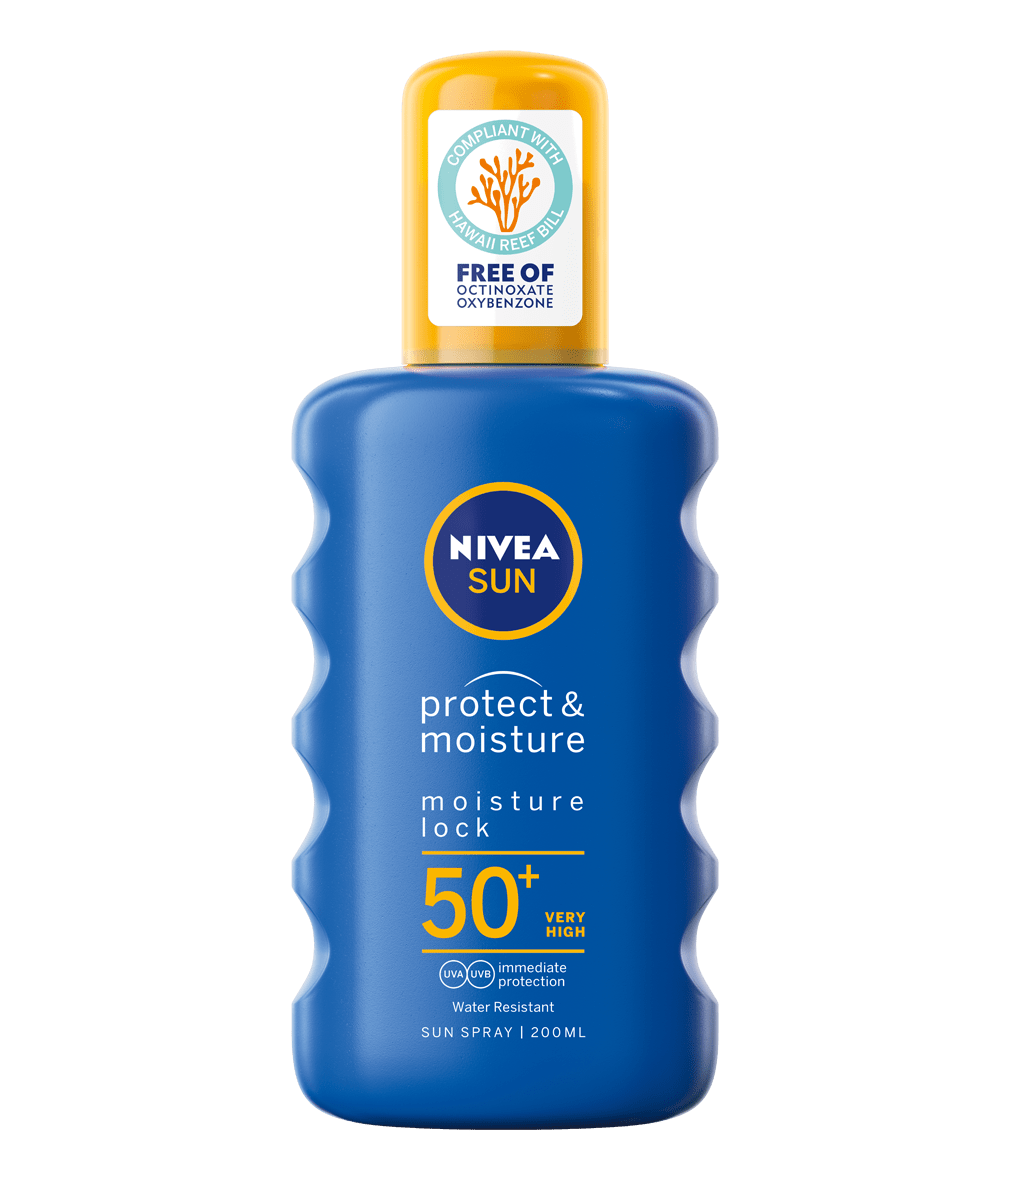 Nivea Sun Protect & Refresh Invisible Cooling Spray Spf50 Sunscreen 200ml - myhoodmarket